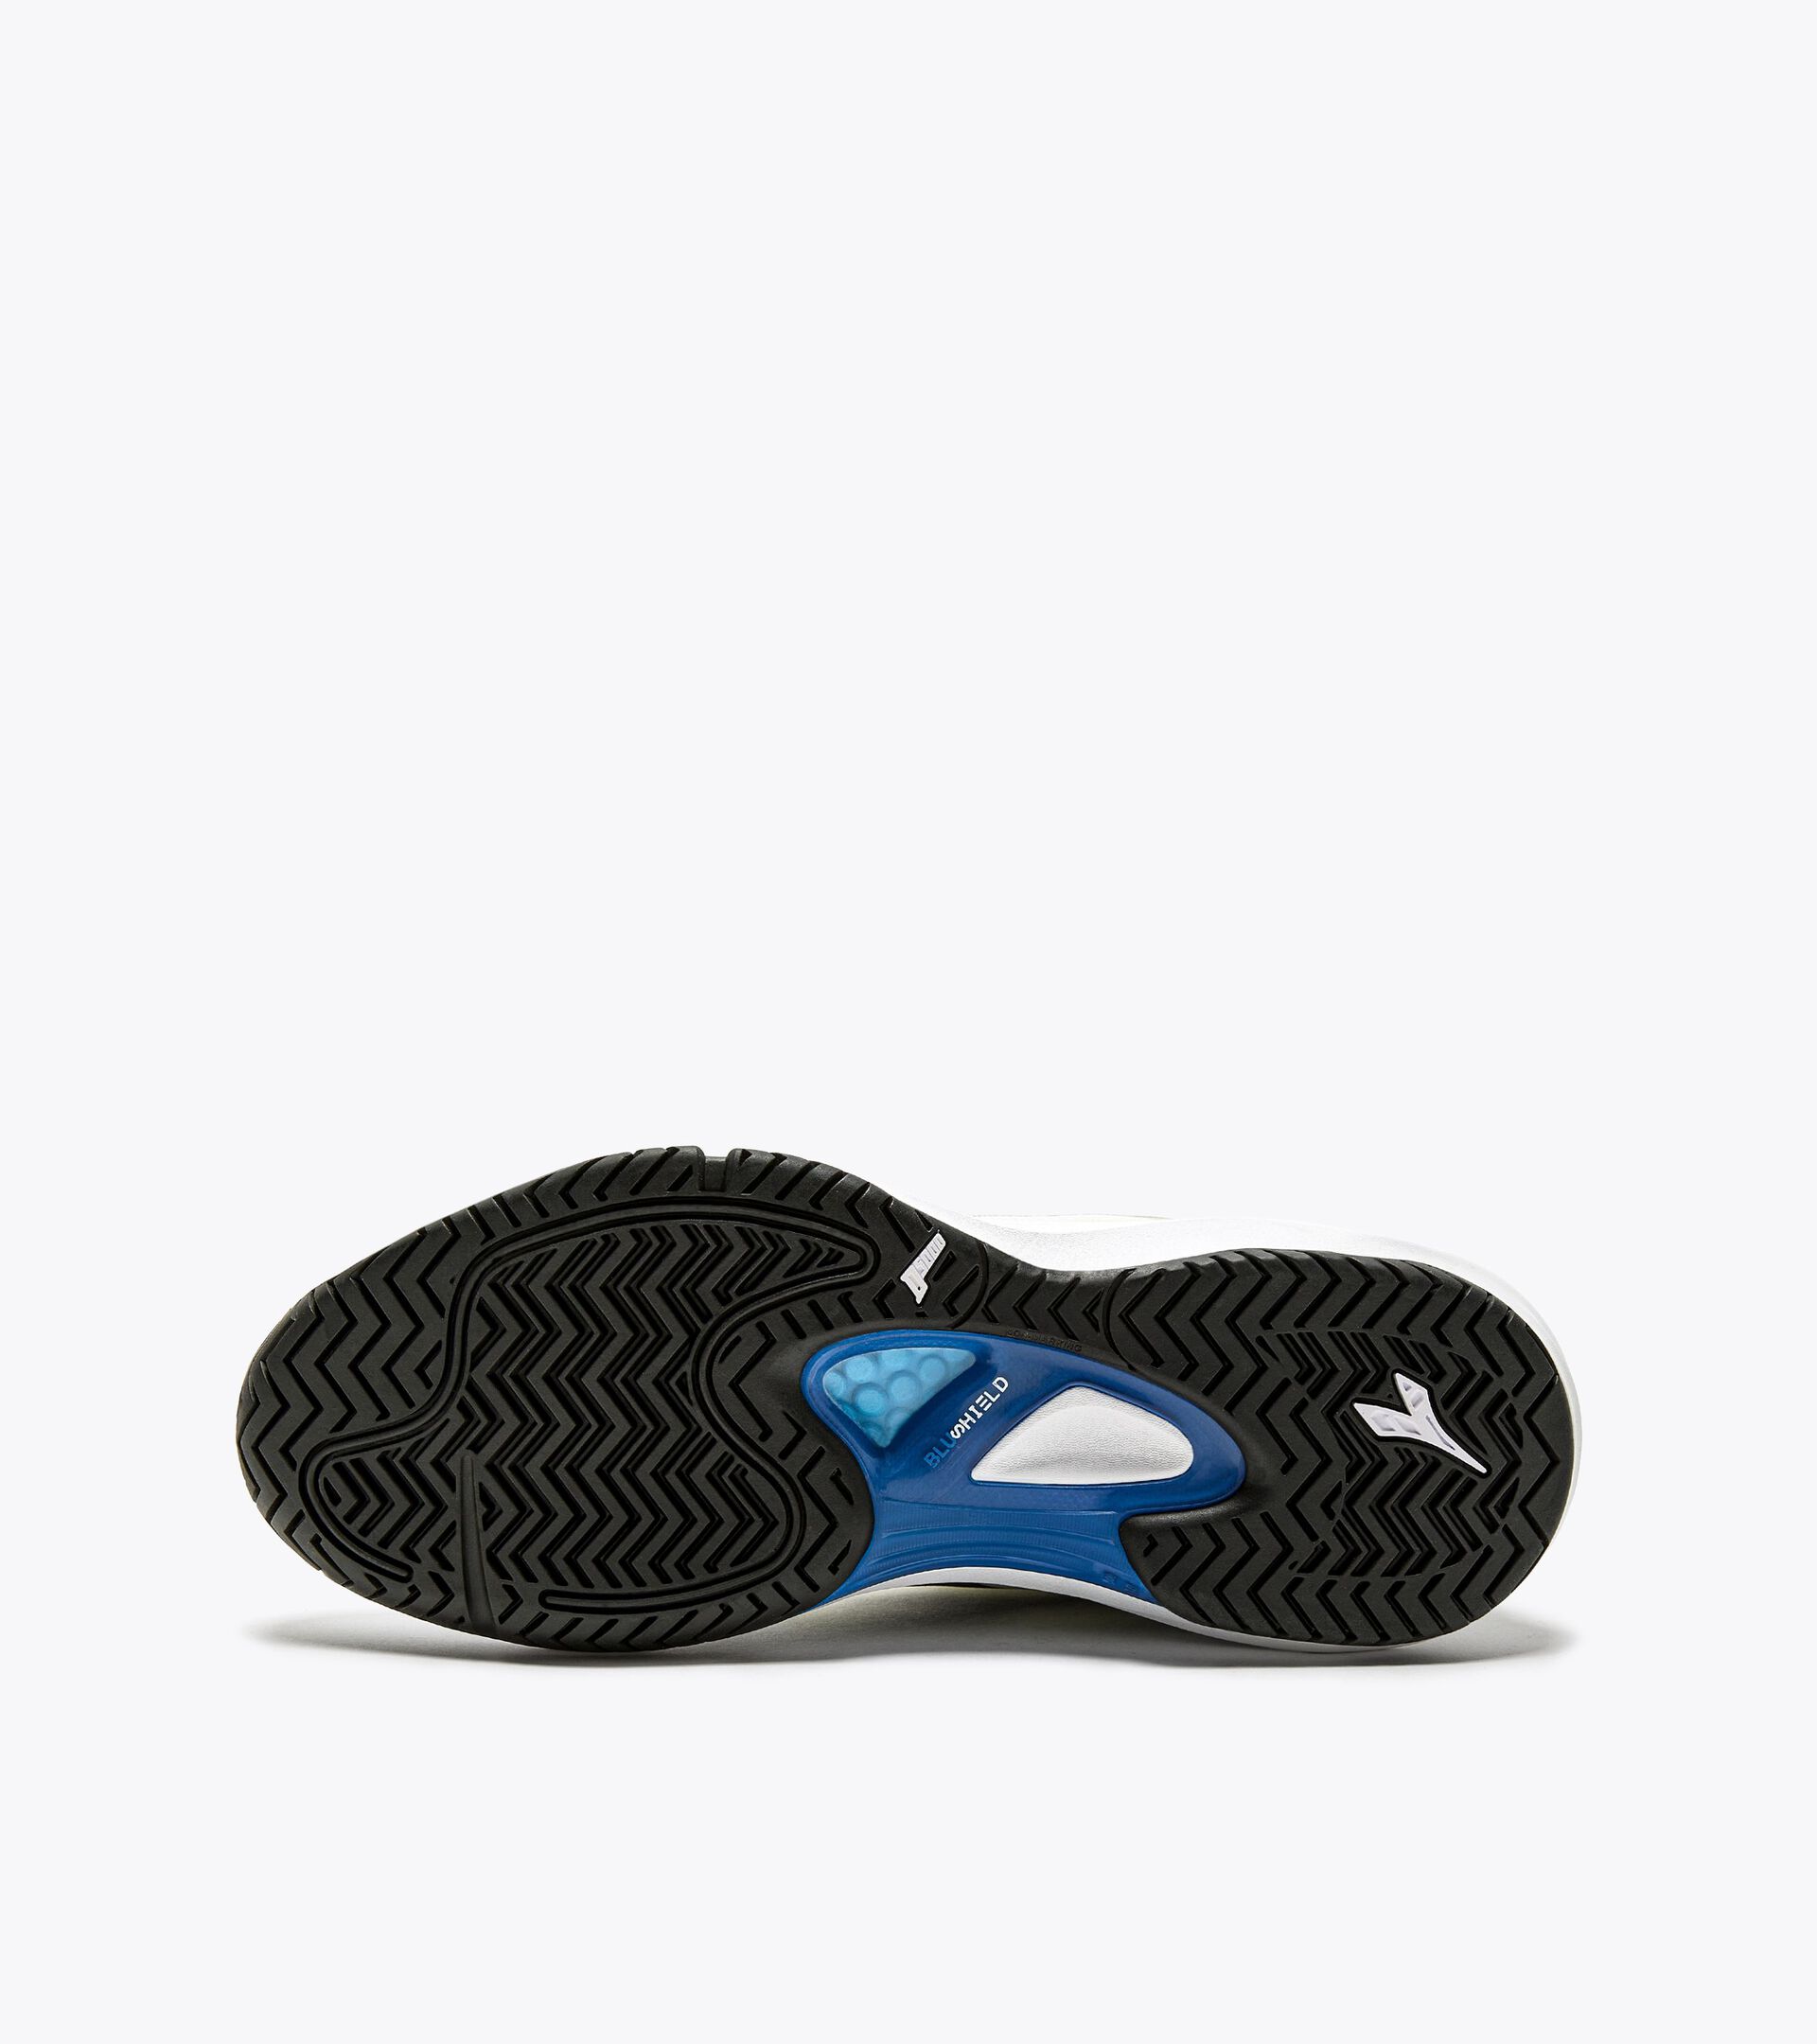 Tennis shoes for hard surfaces or clay - Men SPEED BLUSHIELD FLY 4 + AG WHITE/BLACK/DEJA VU BLUE - Diadora